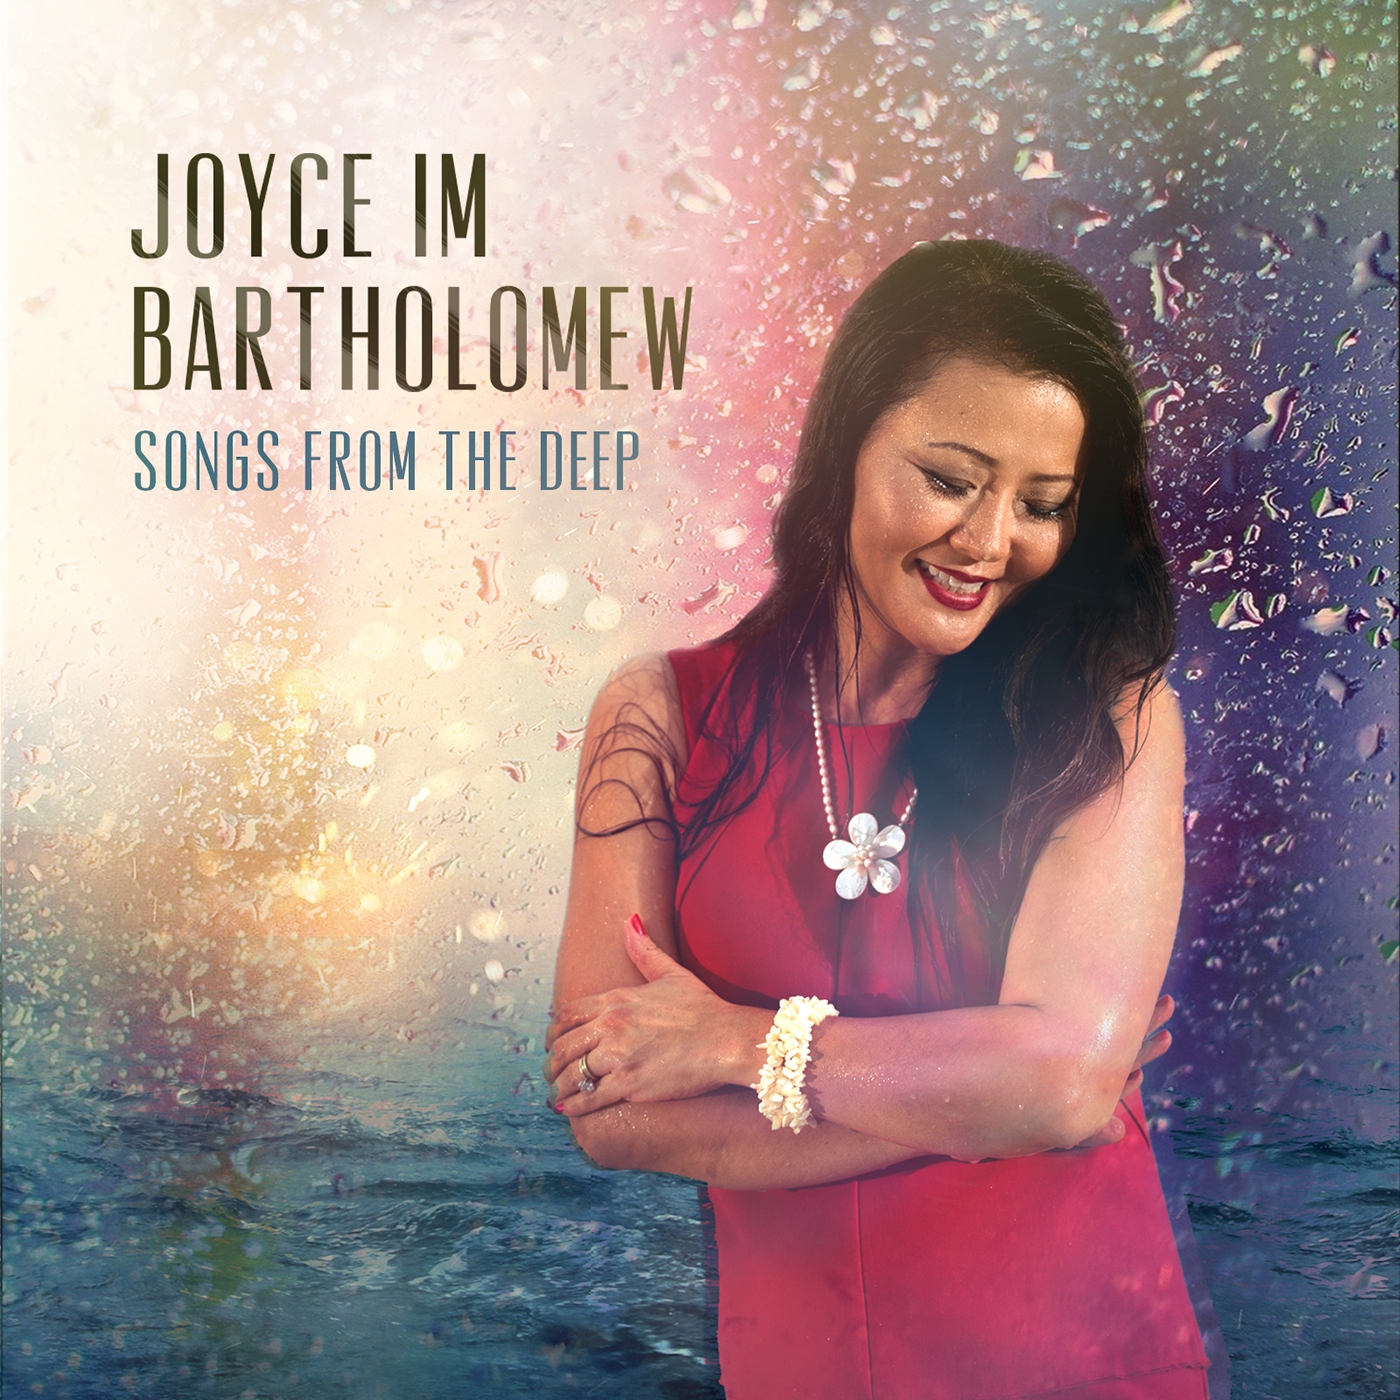 Joyce Im Bartholomew - Songs From The Deep